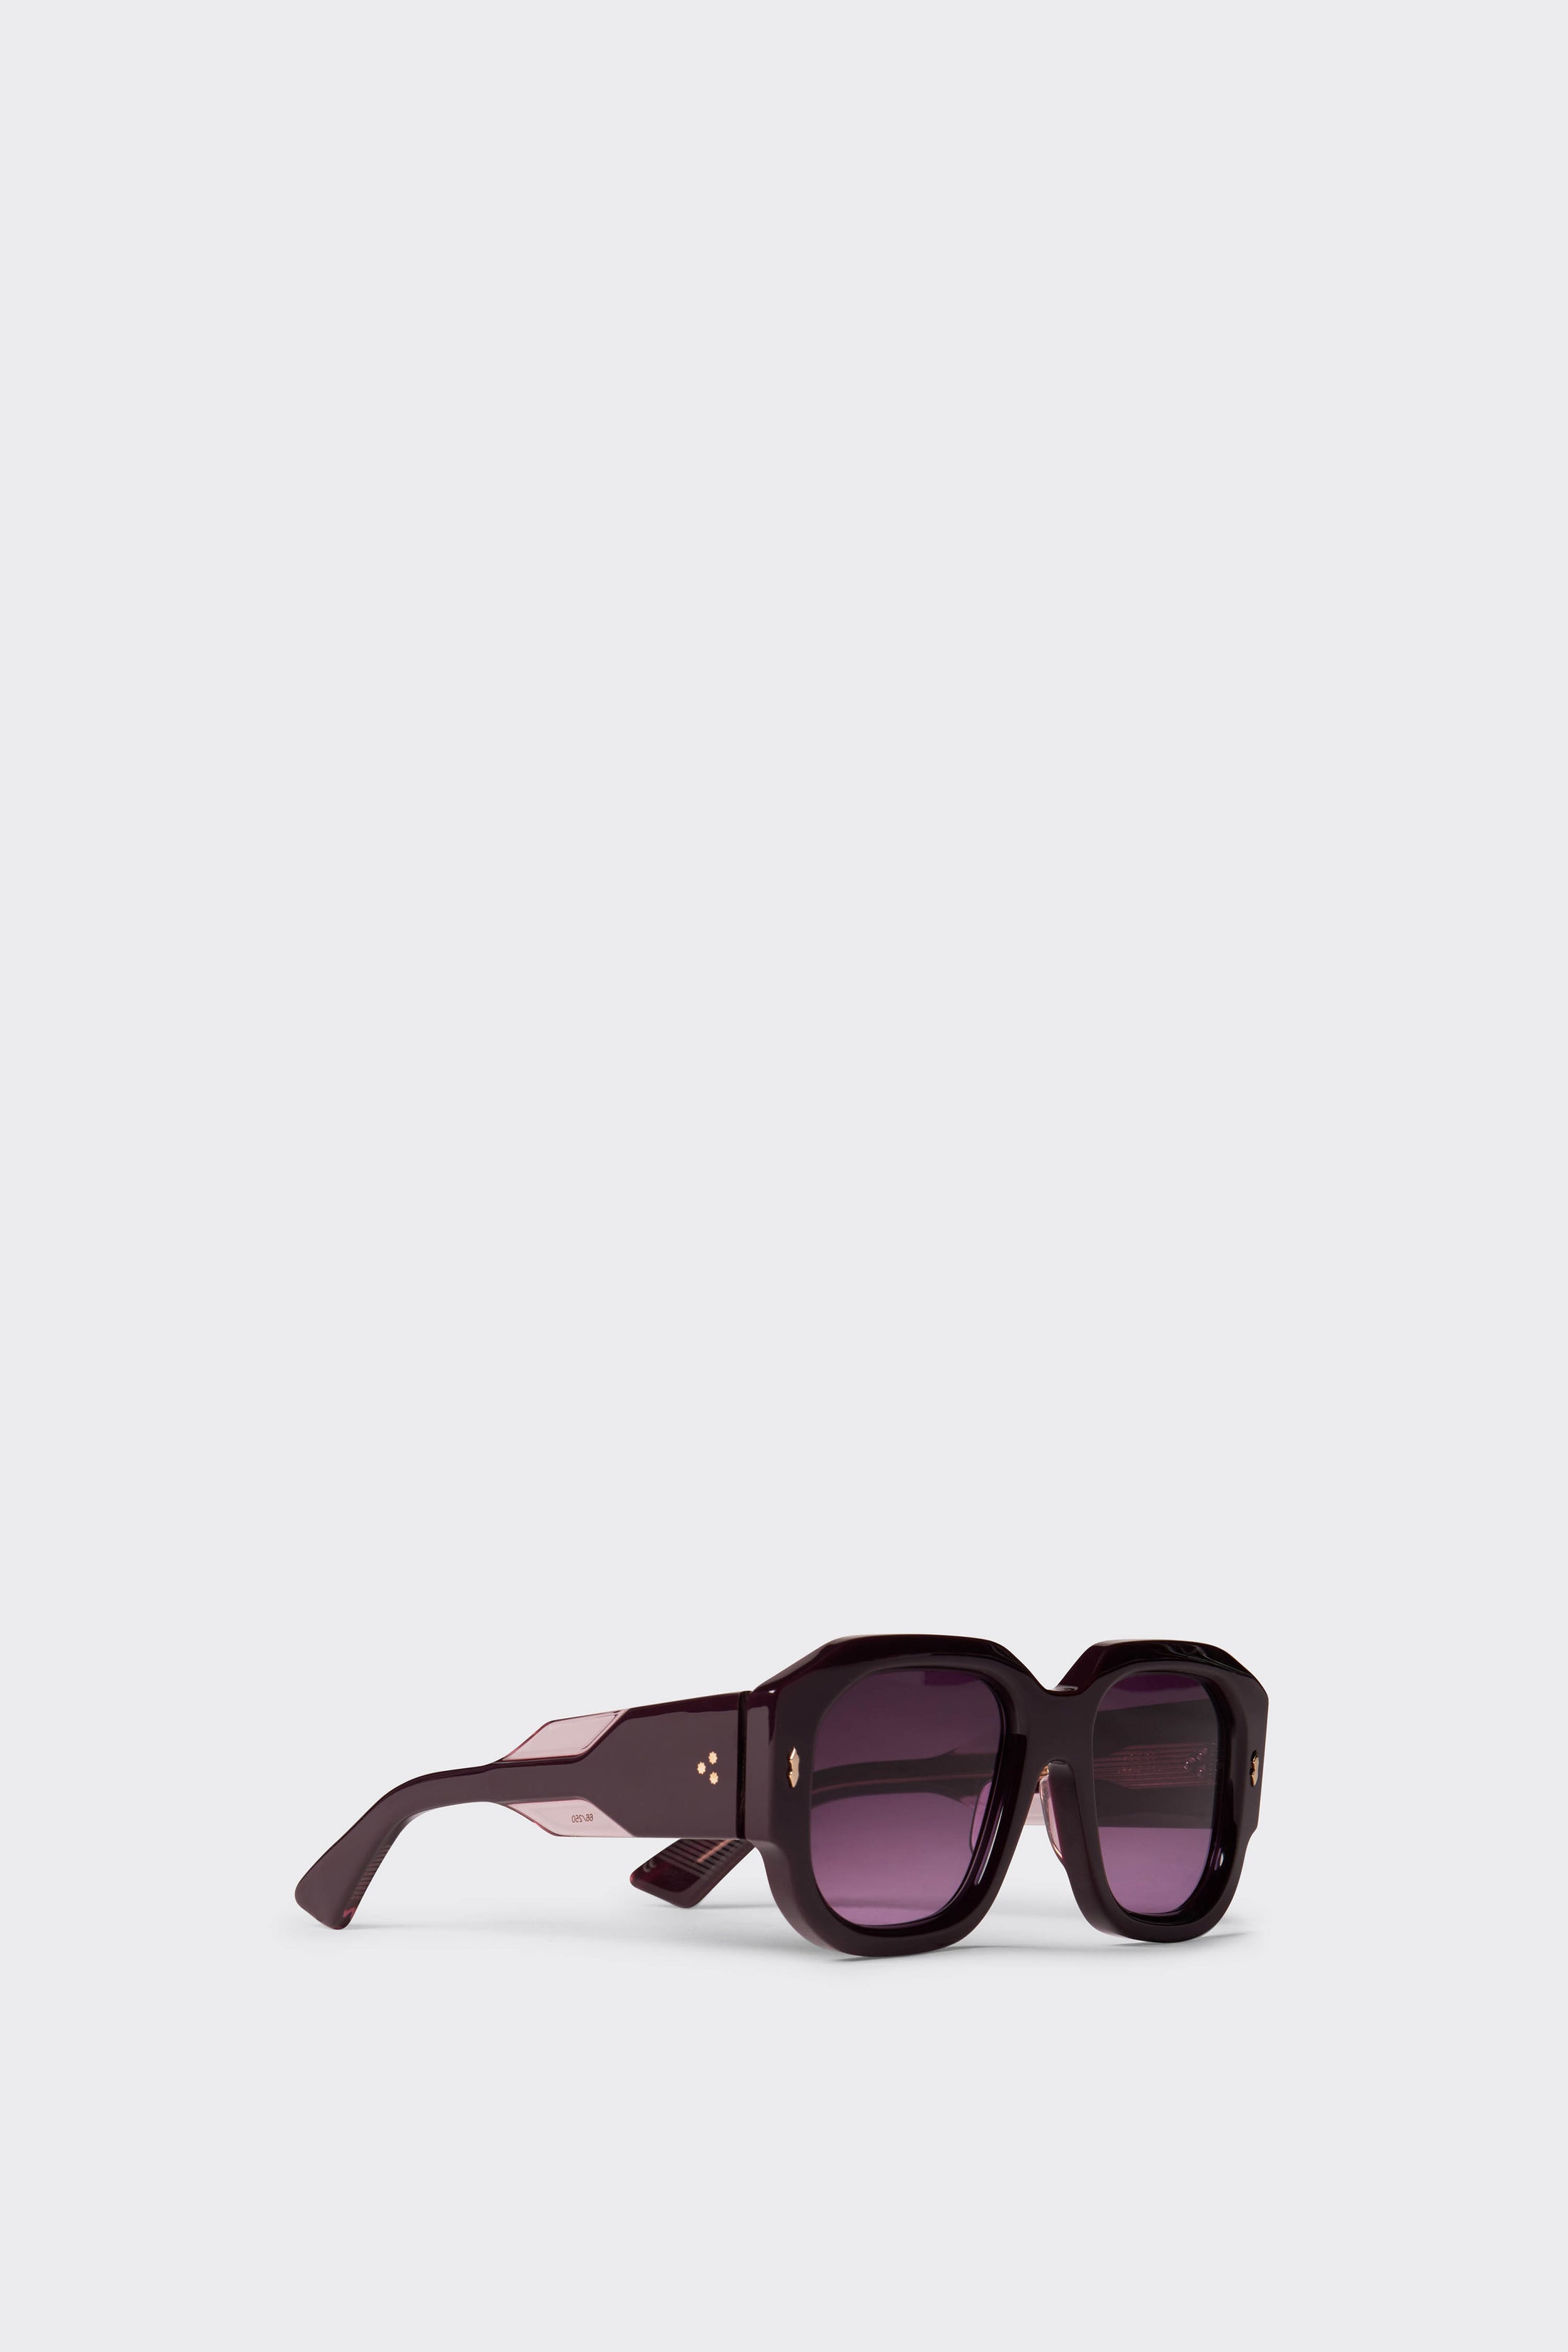 Lacy Purple Sunglasses